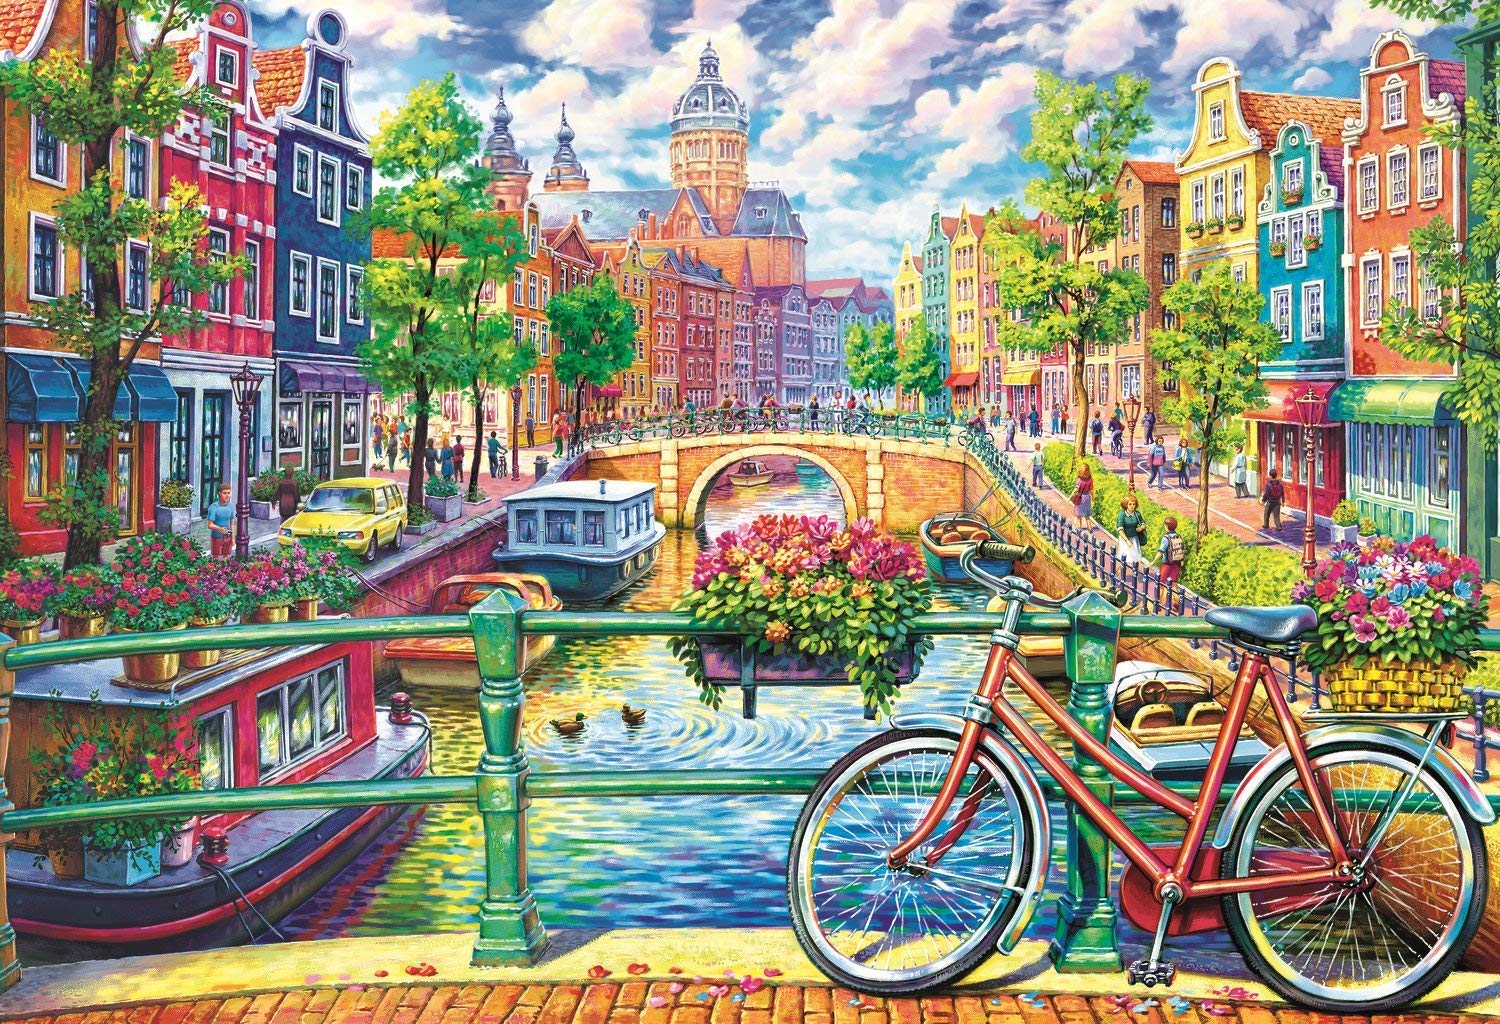 Puzzle 1500 piese - Amsterdam | Trefl